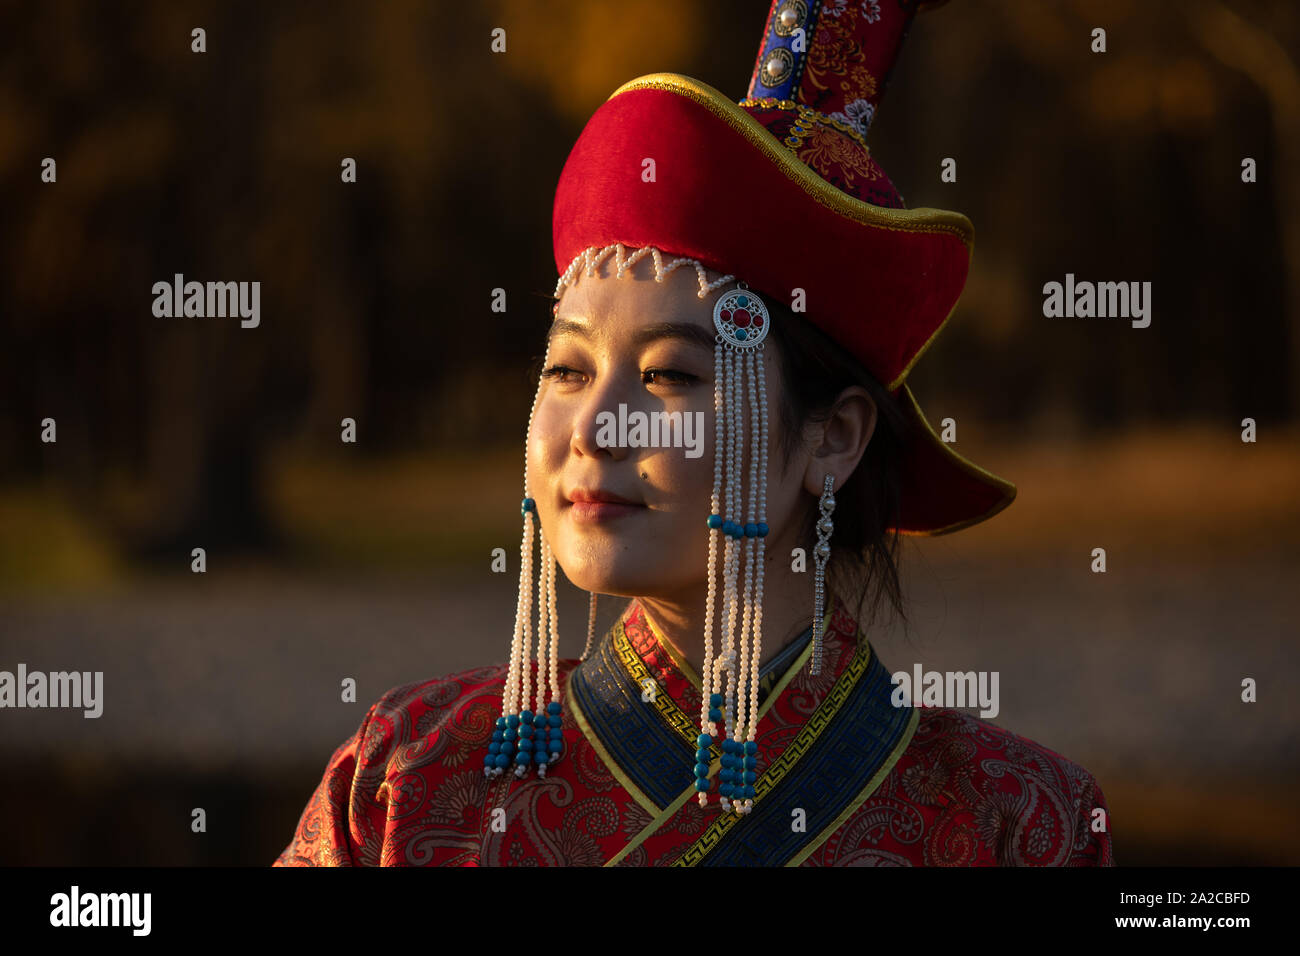 https://c8.alamy.com/comp/2A2CBFD/beautiful-young-woman-posing-in-traditional-mongolian-dress-in-sunset-light-ulaanbaatar-mongolia-2A2CBFD.jpg